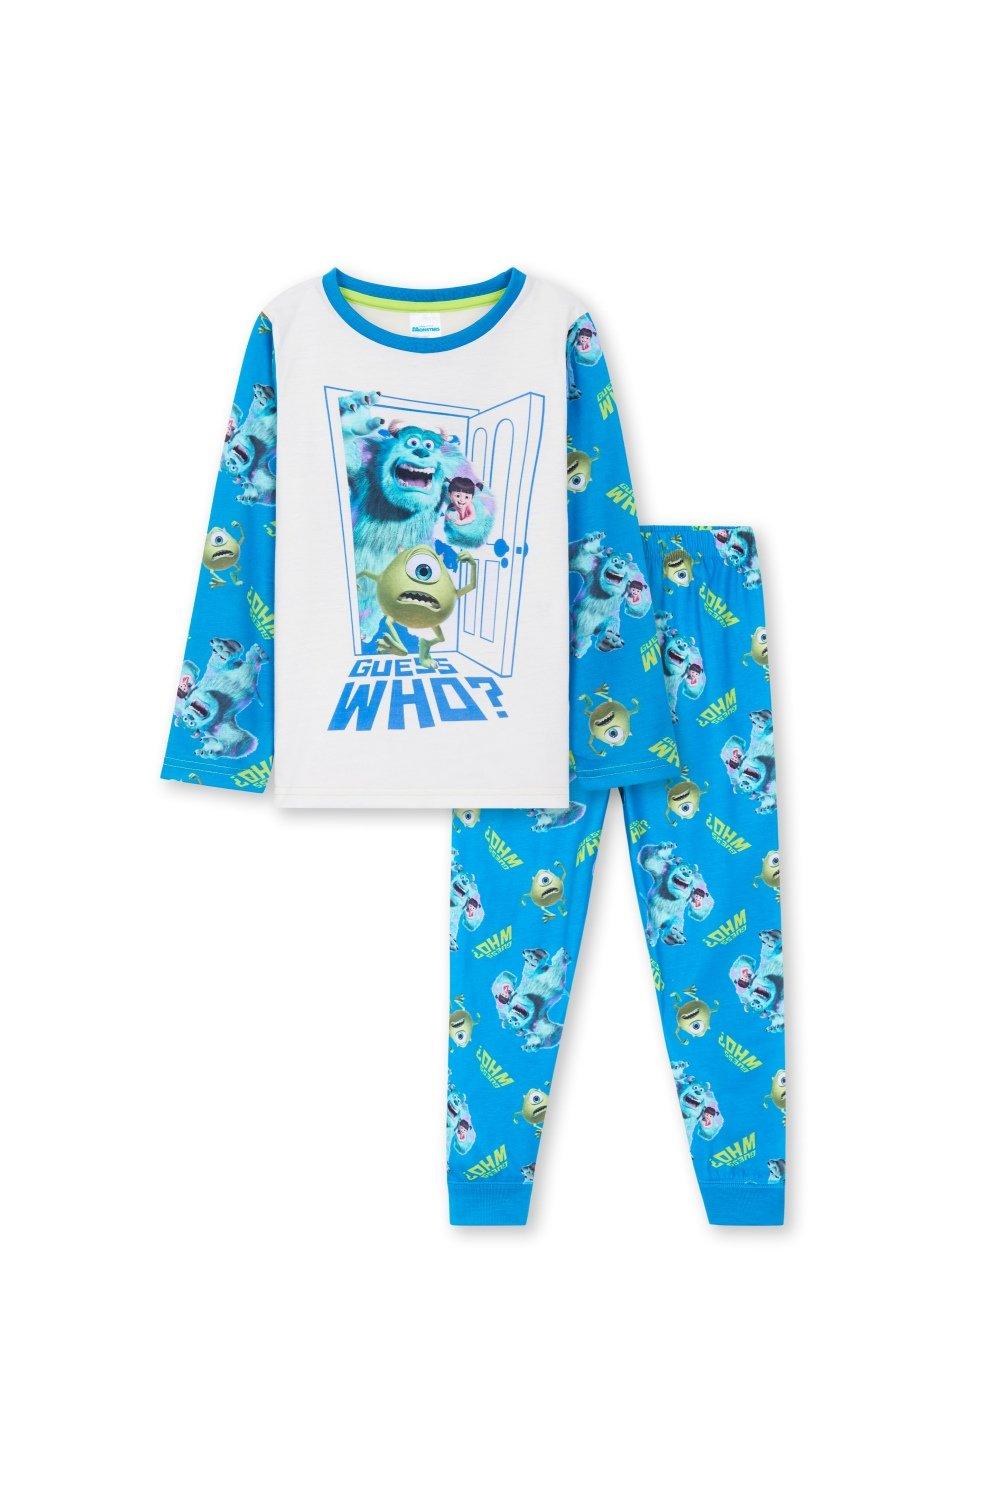 Monsters Inc Long Sleeve Pyjama Set - Bottoms And Top